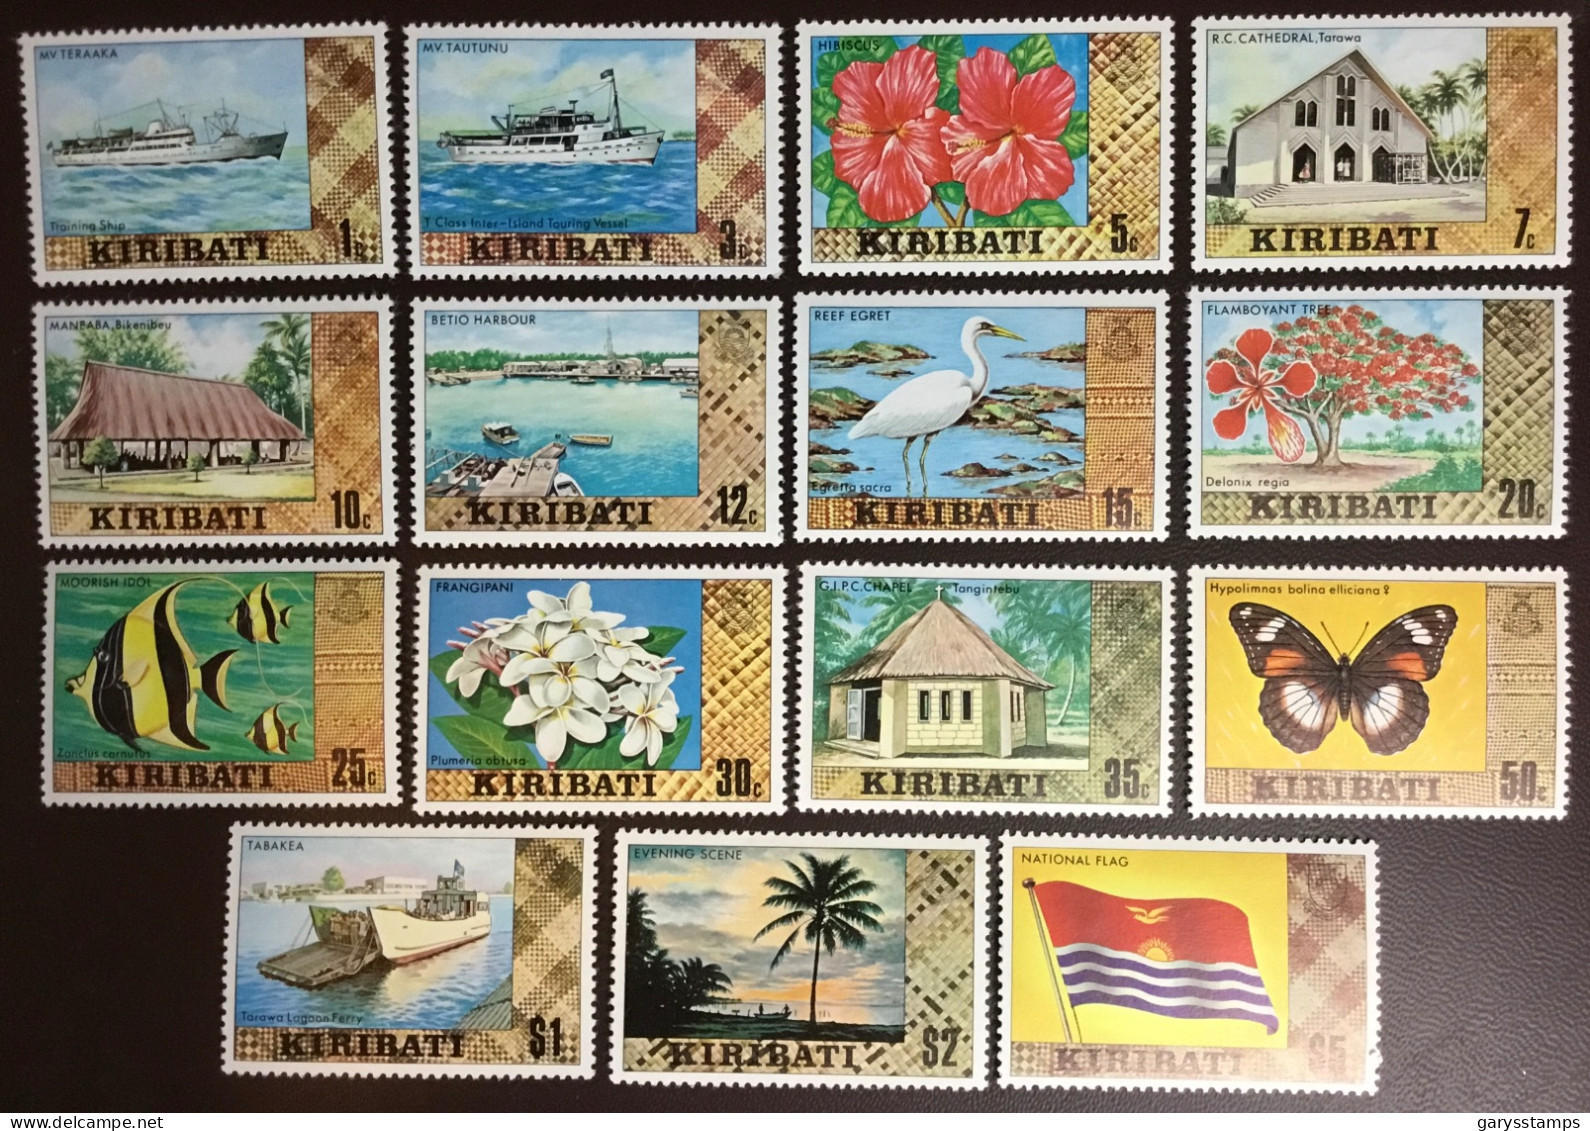 Kiribati 1980 Definitives Set No Watermark Flowers Birds Butterflies Trees Fish MNH - Kiribati (1979-...)